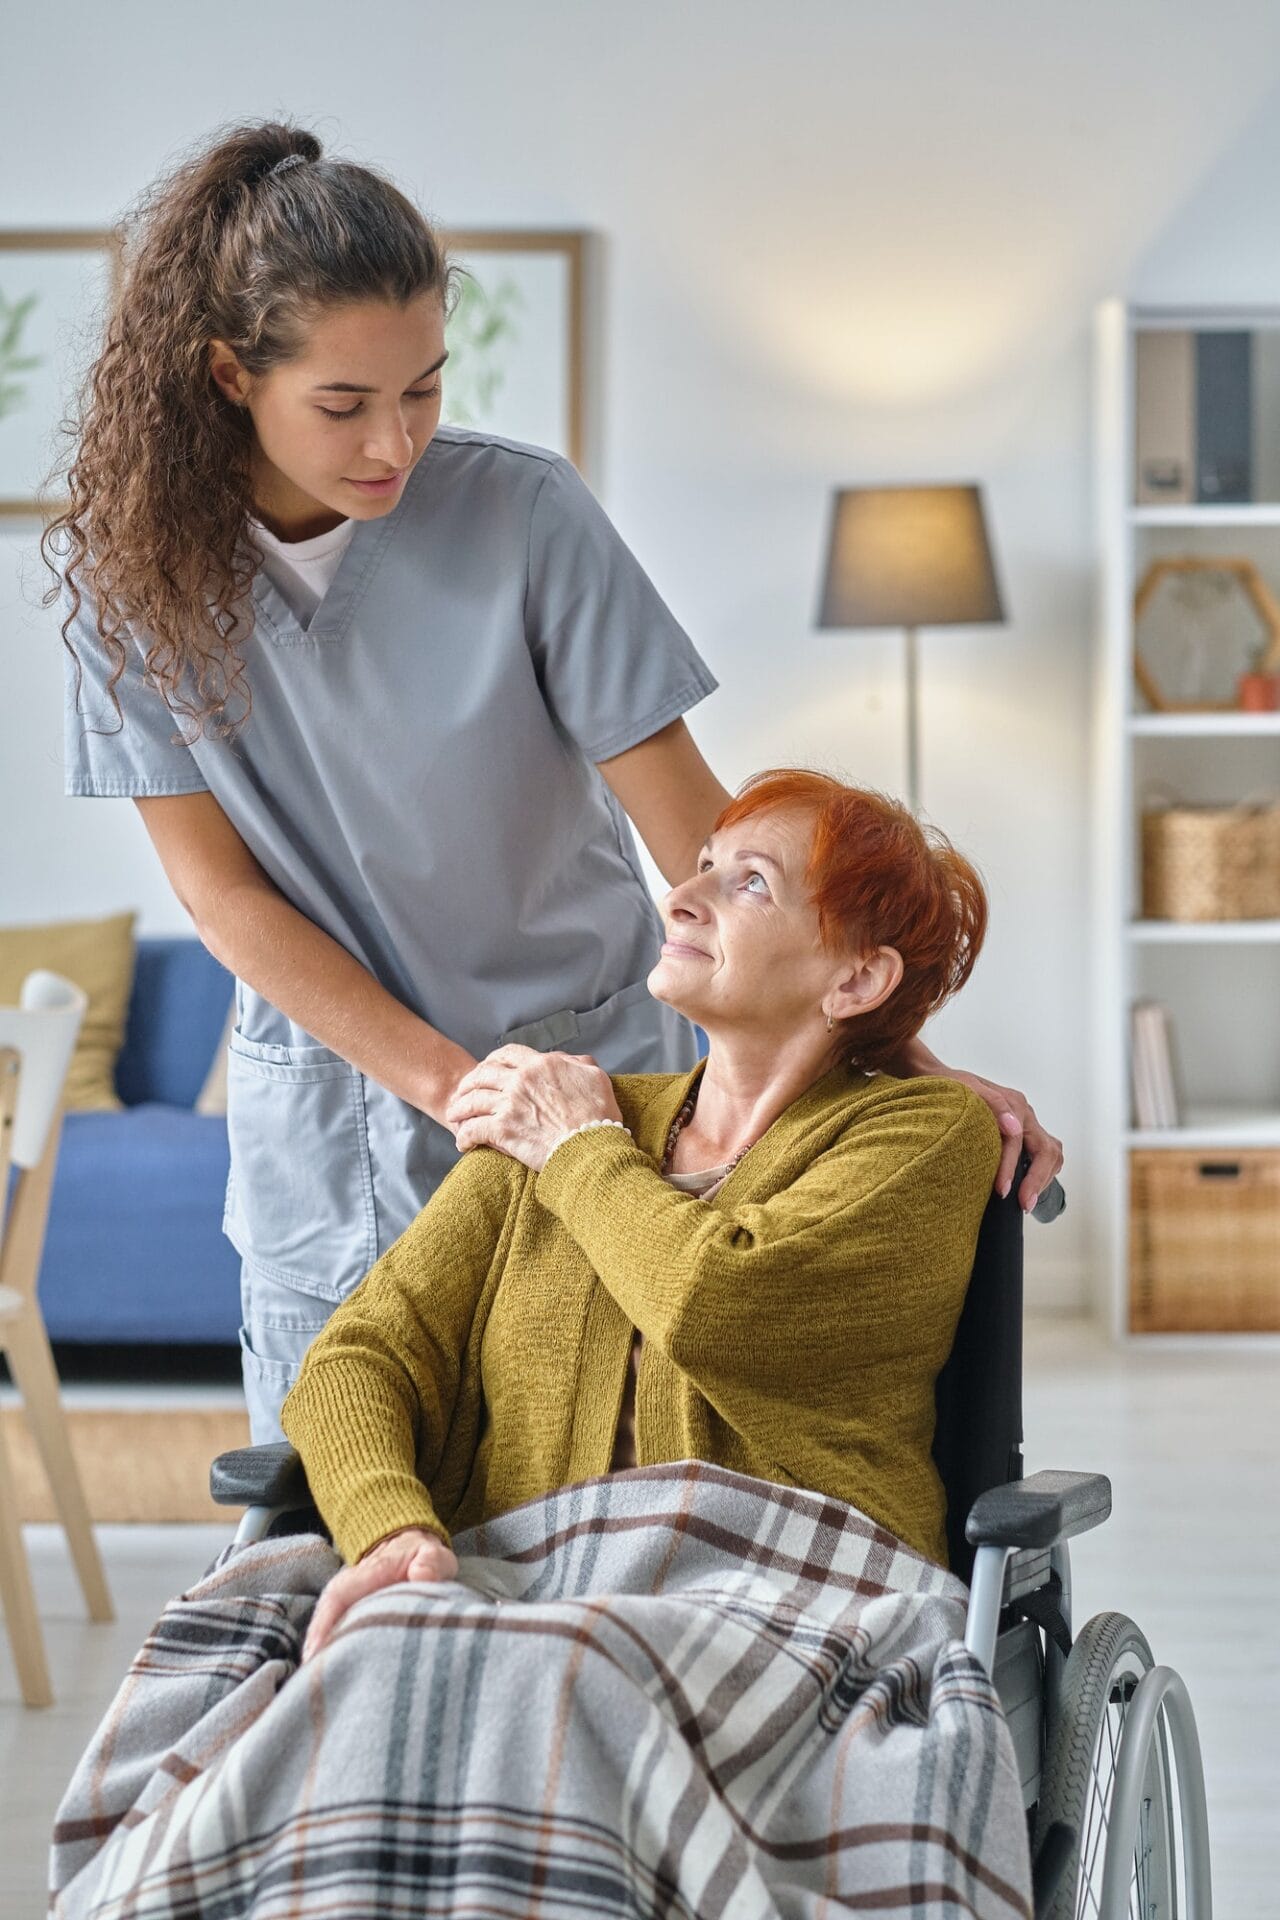 A nurse is helping an elderly woman in a wheelchair.